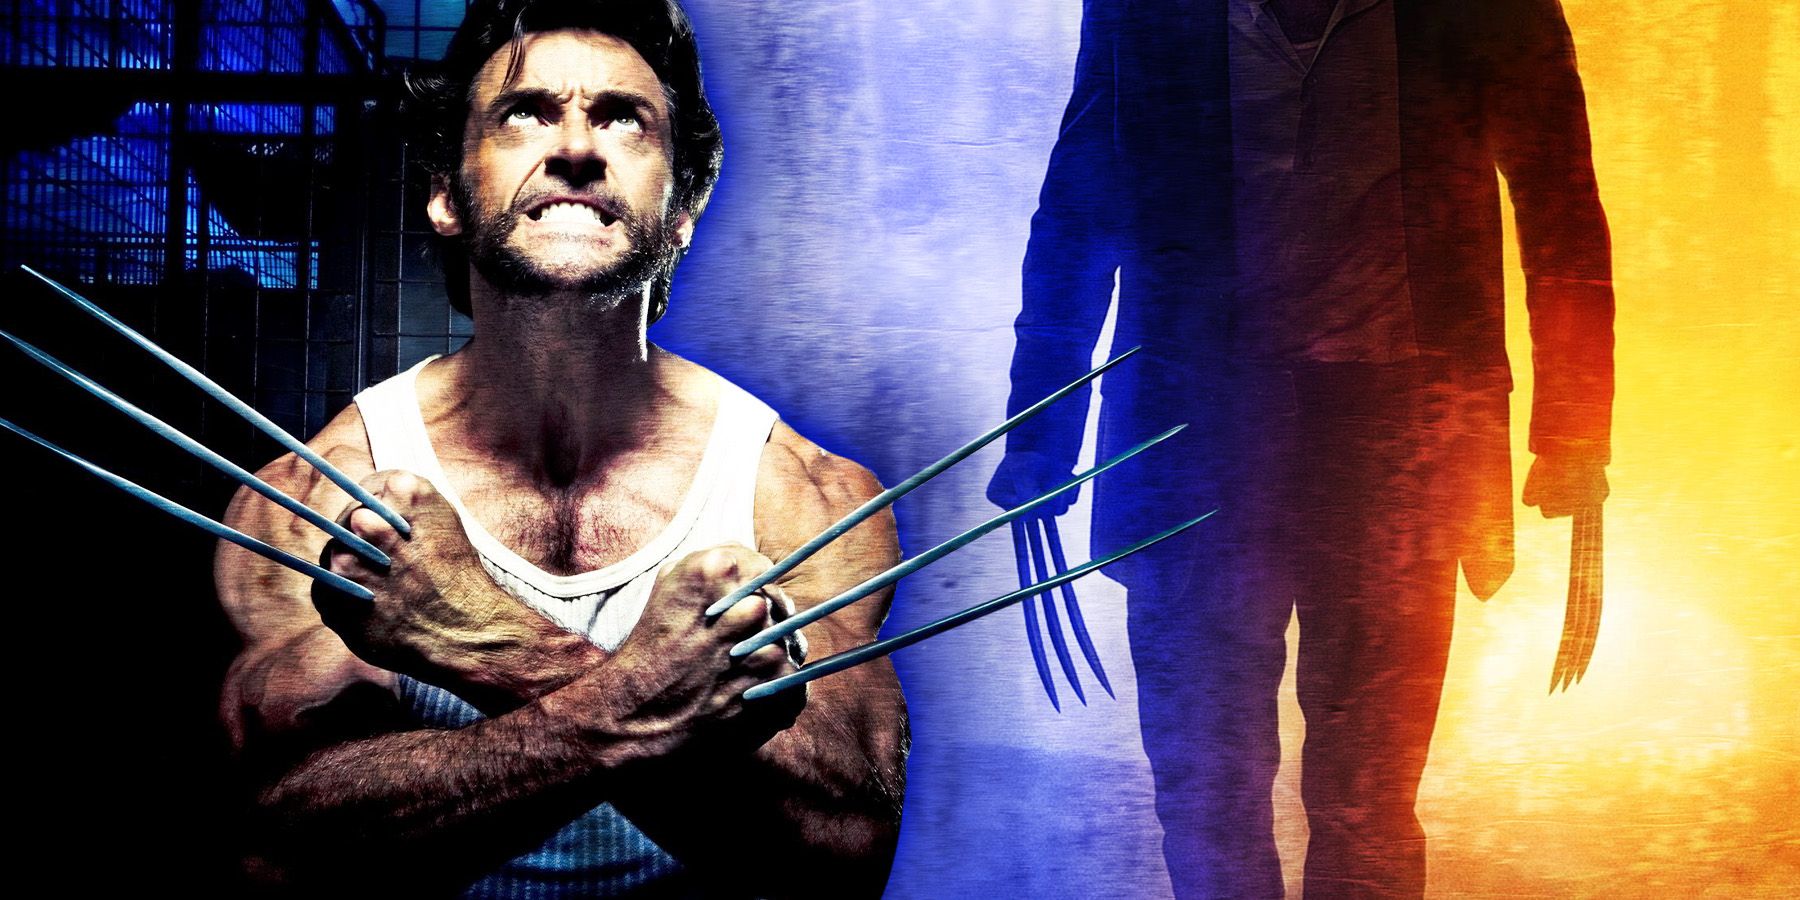 X-Men Origins: Wolverine and Logan poster split image